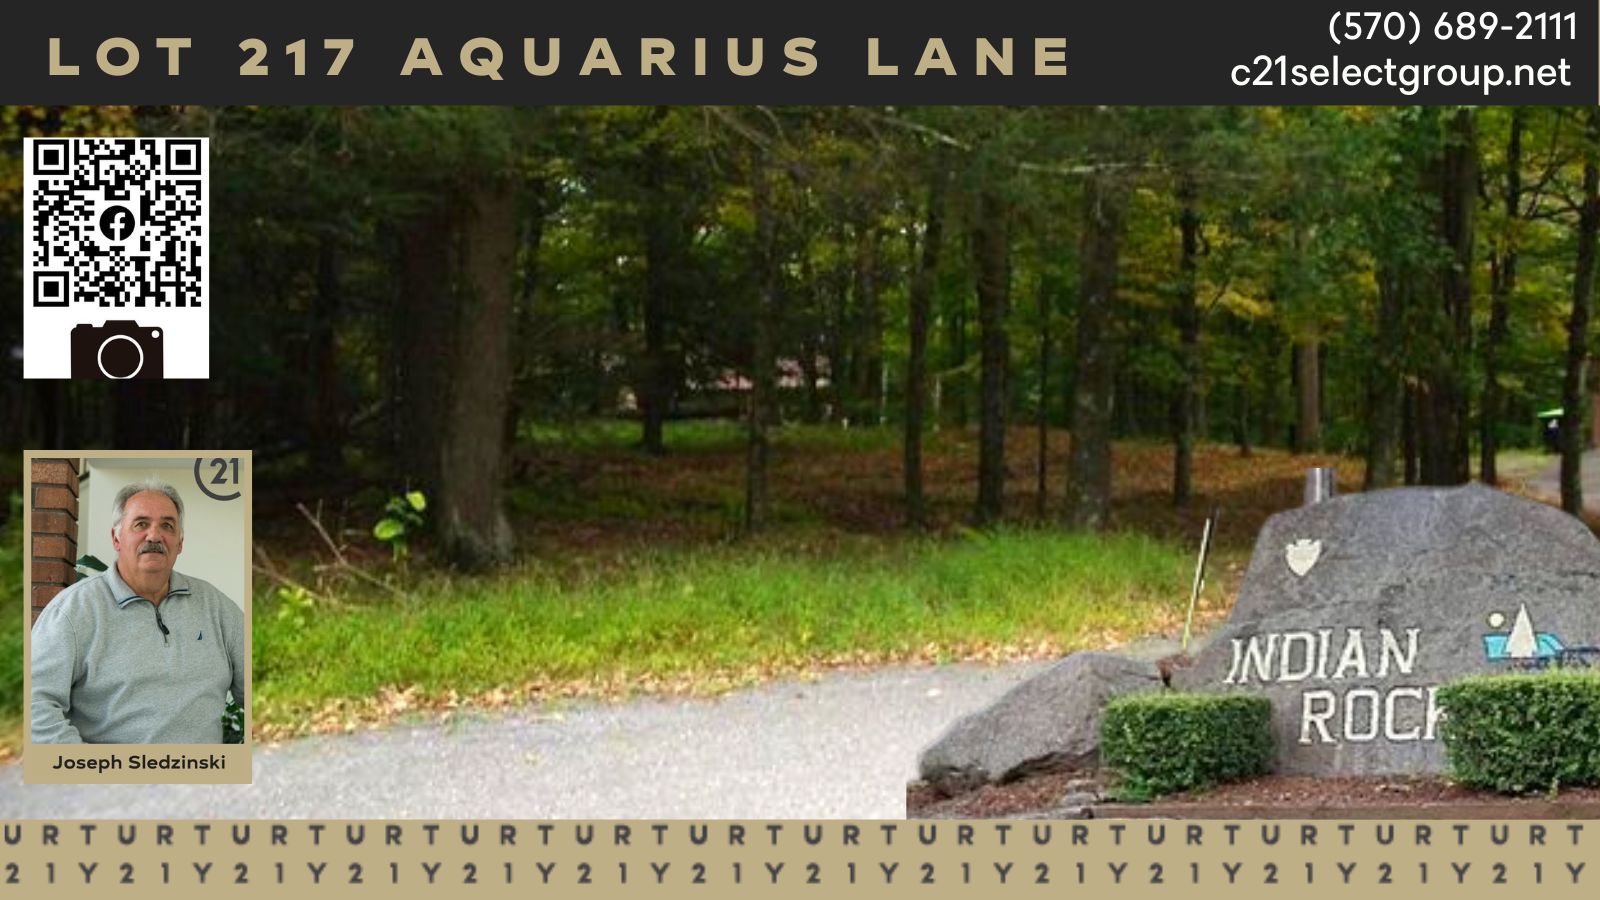 Lot 217 Aquarius Lane: Ready to Build Lot in Indian Rocks